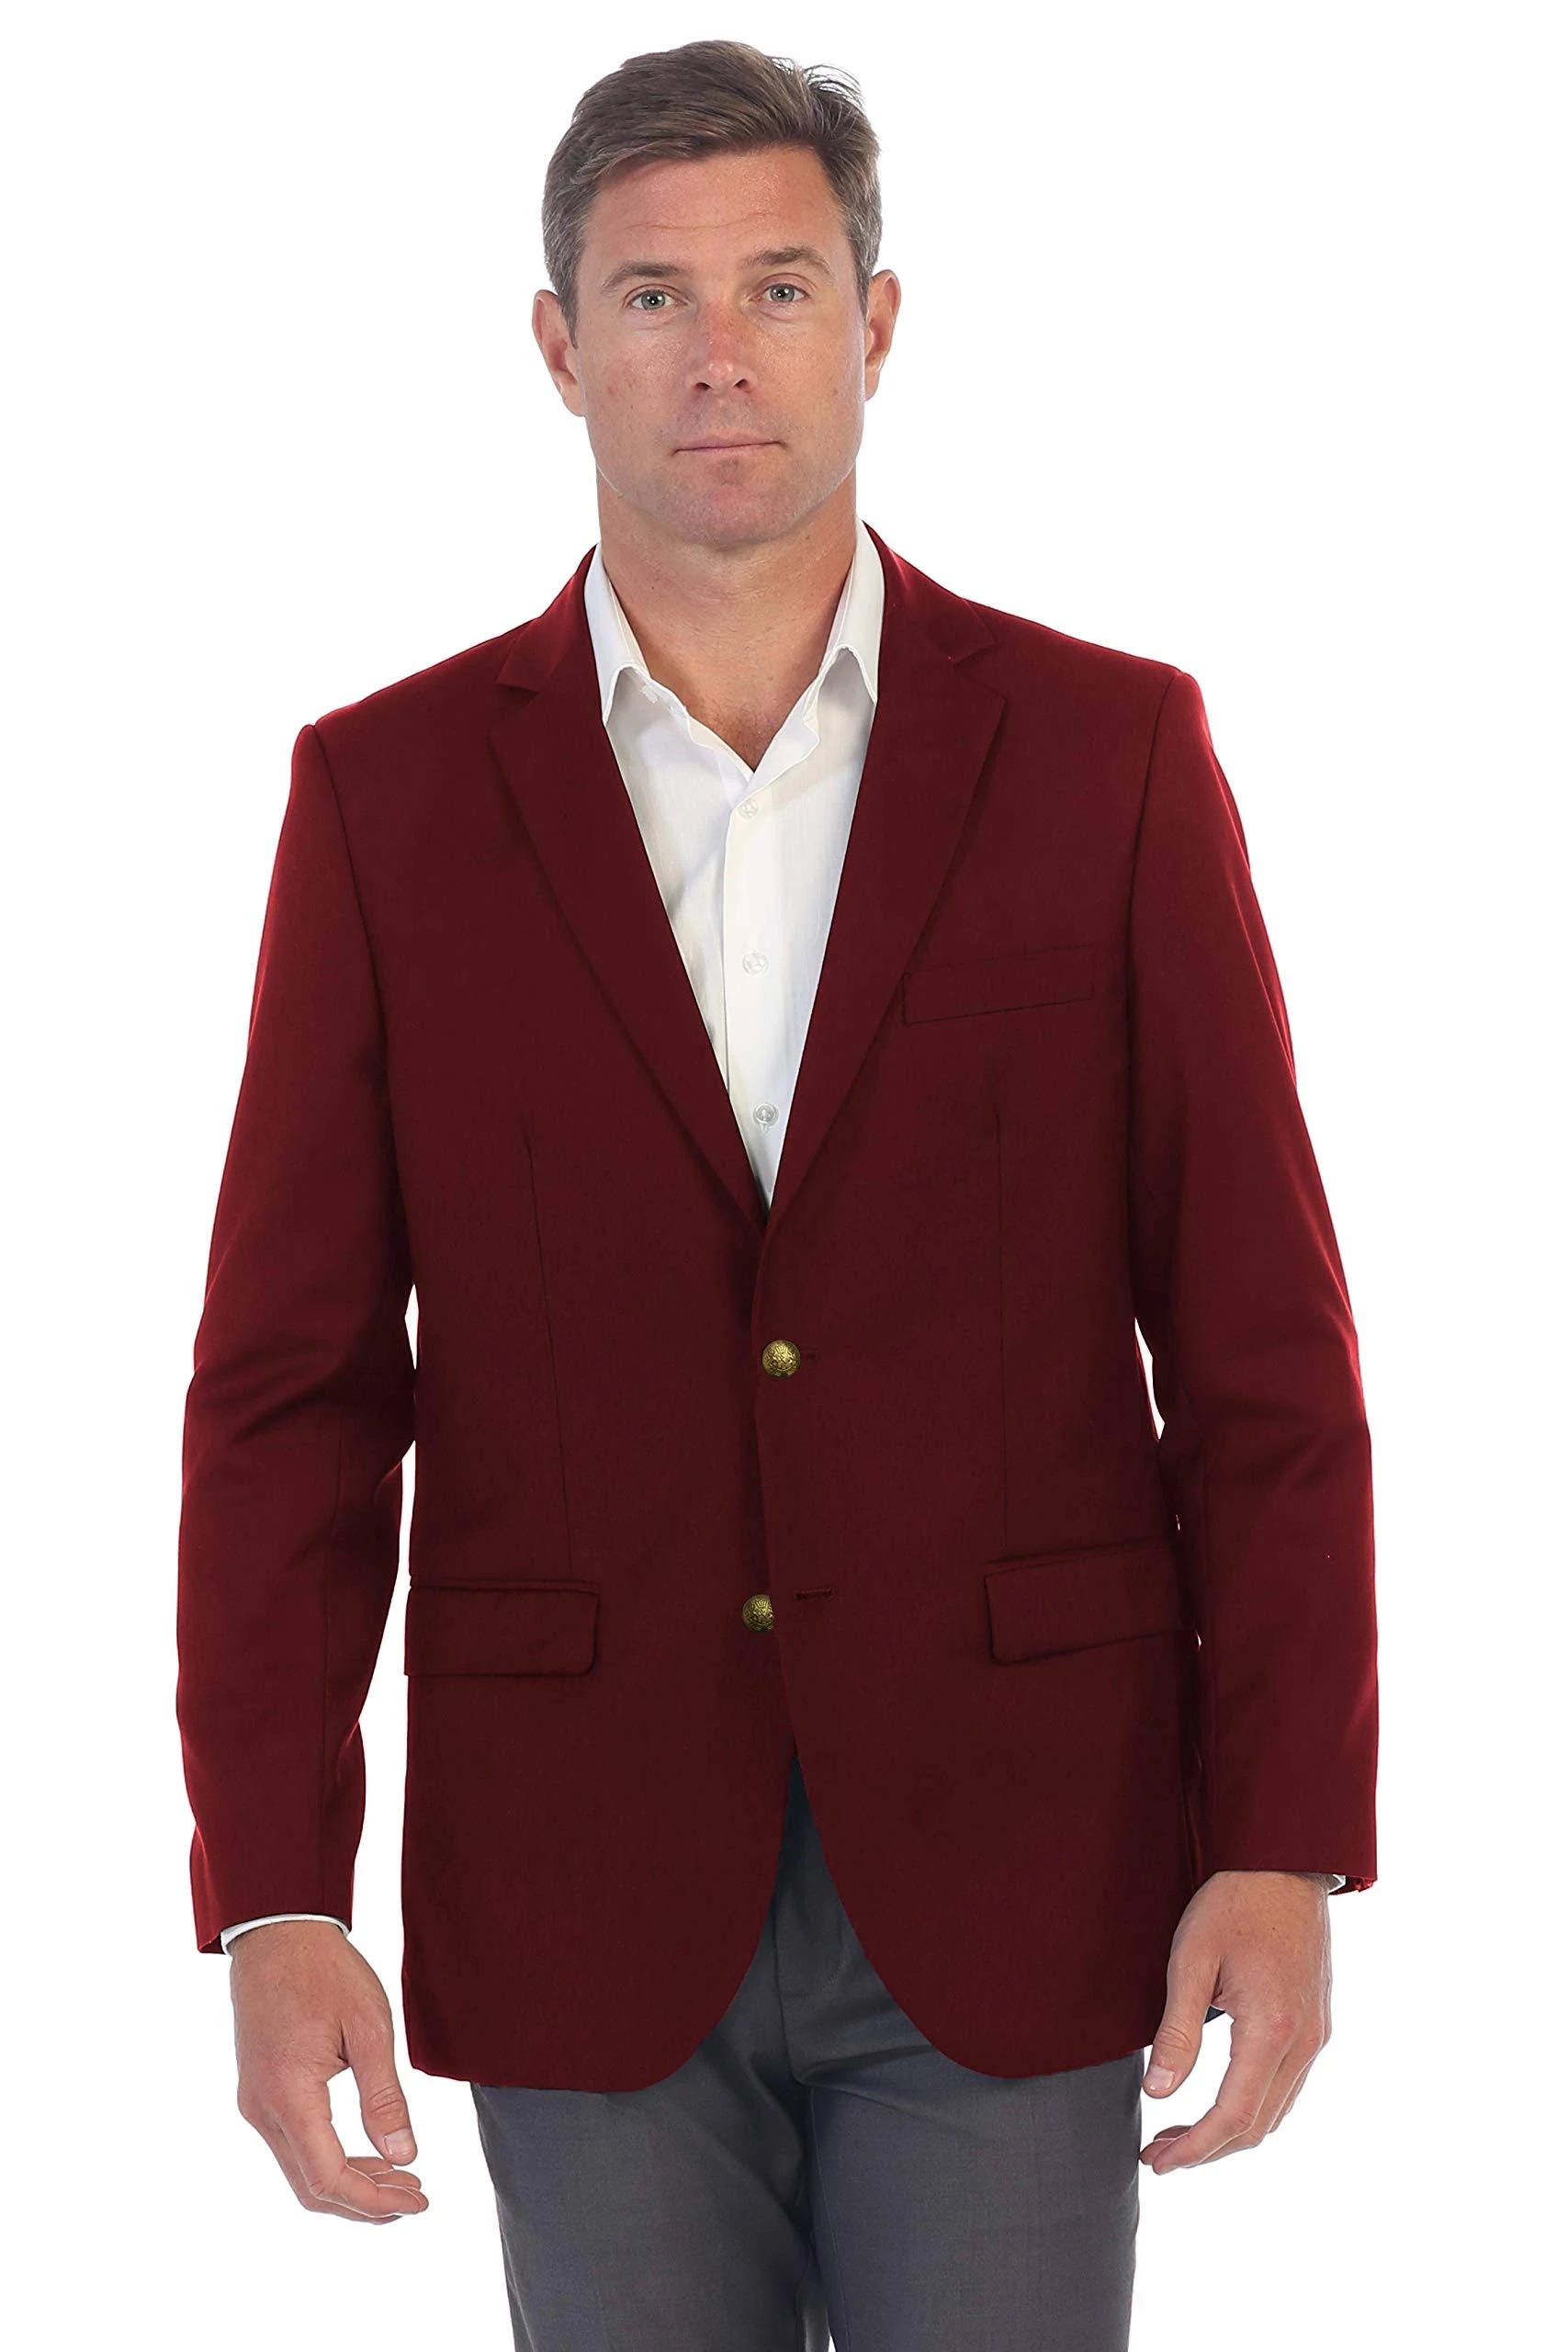 Elegant Red Blazer for Formal Occasions | Image